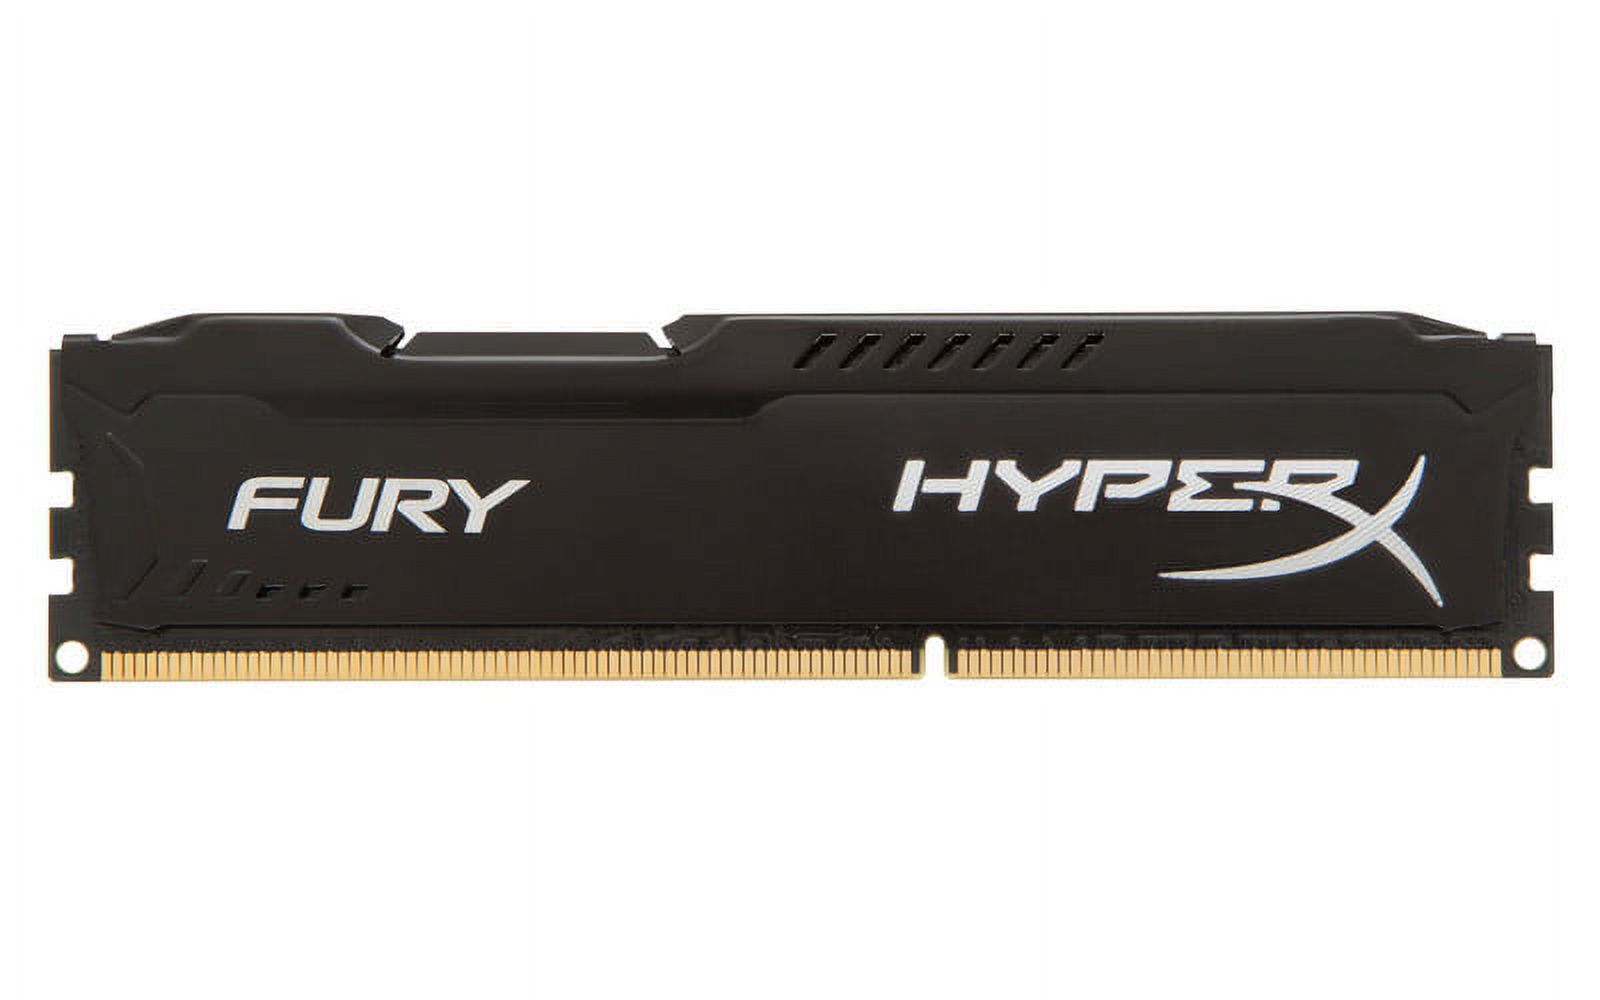 HyperX FURY Memory Black 8GB 1600MHz DDR3 CL10 DIMM HX316C10FB/8 - image 2 of 3